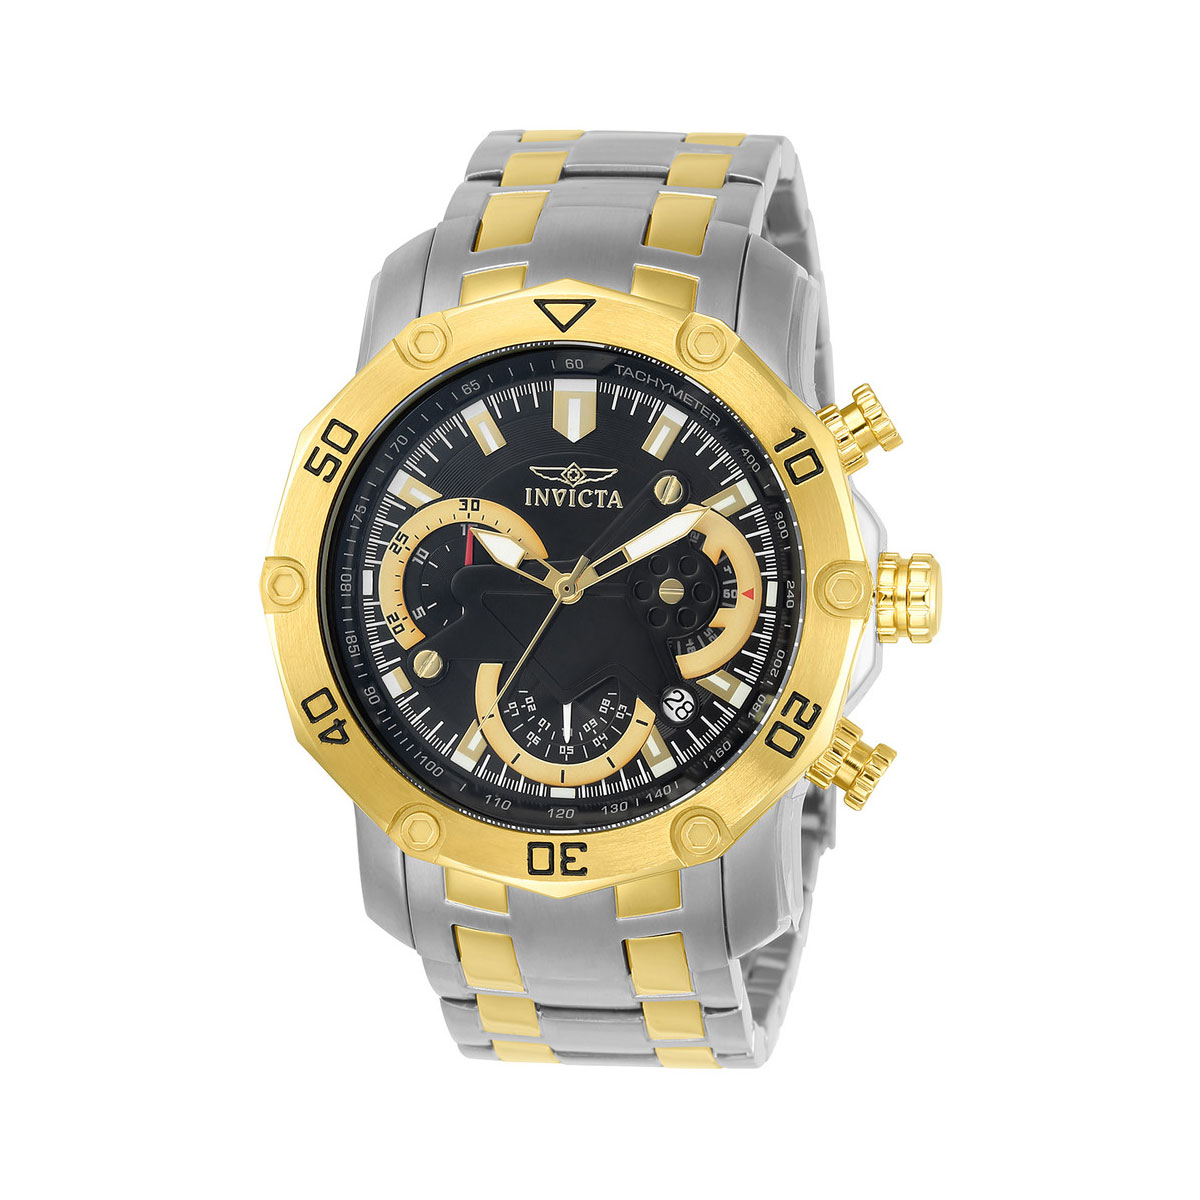 Invicta Men's 22768 Pro Diver Quartz Multifunction Black Dial Watch